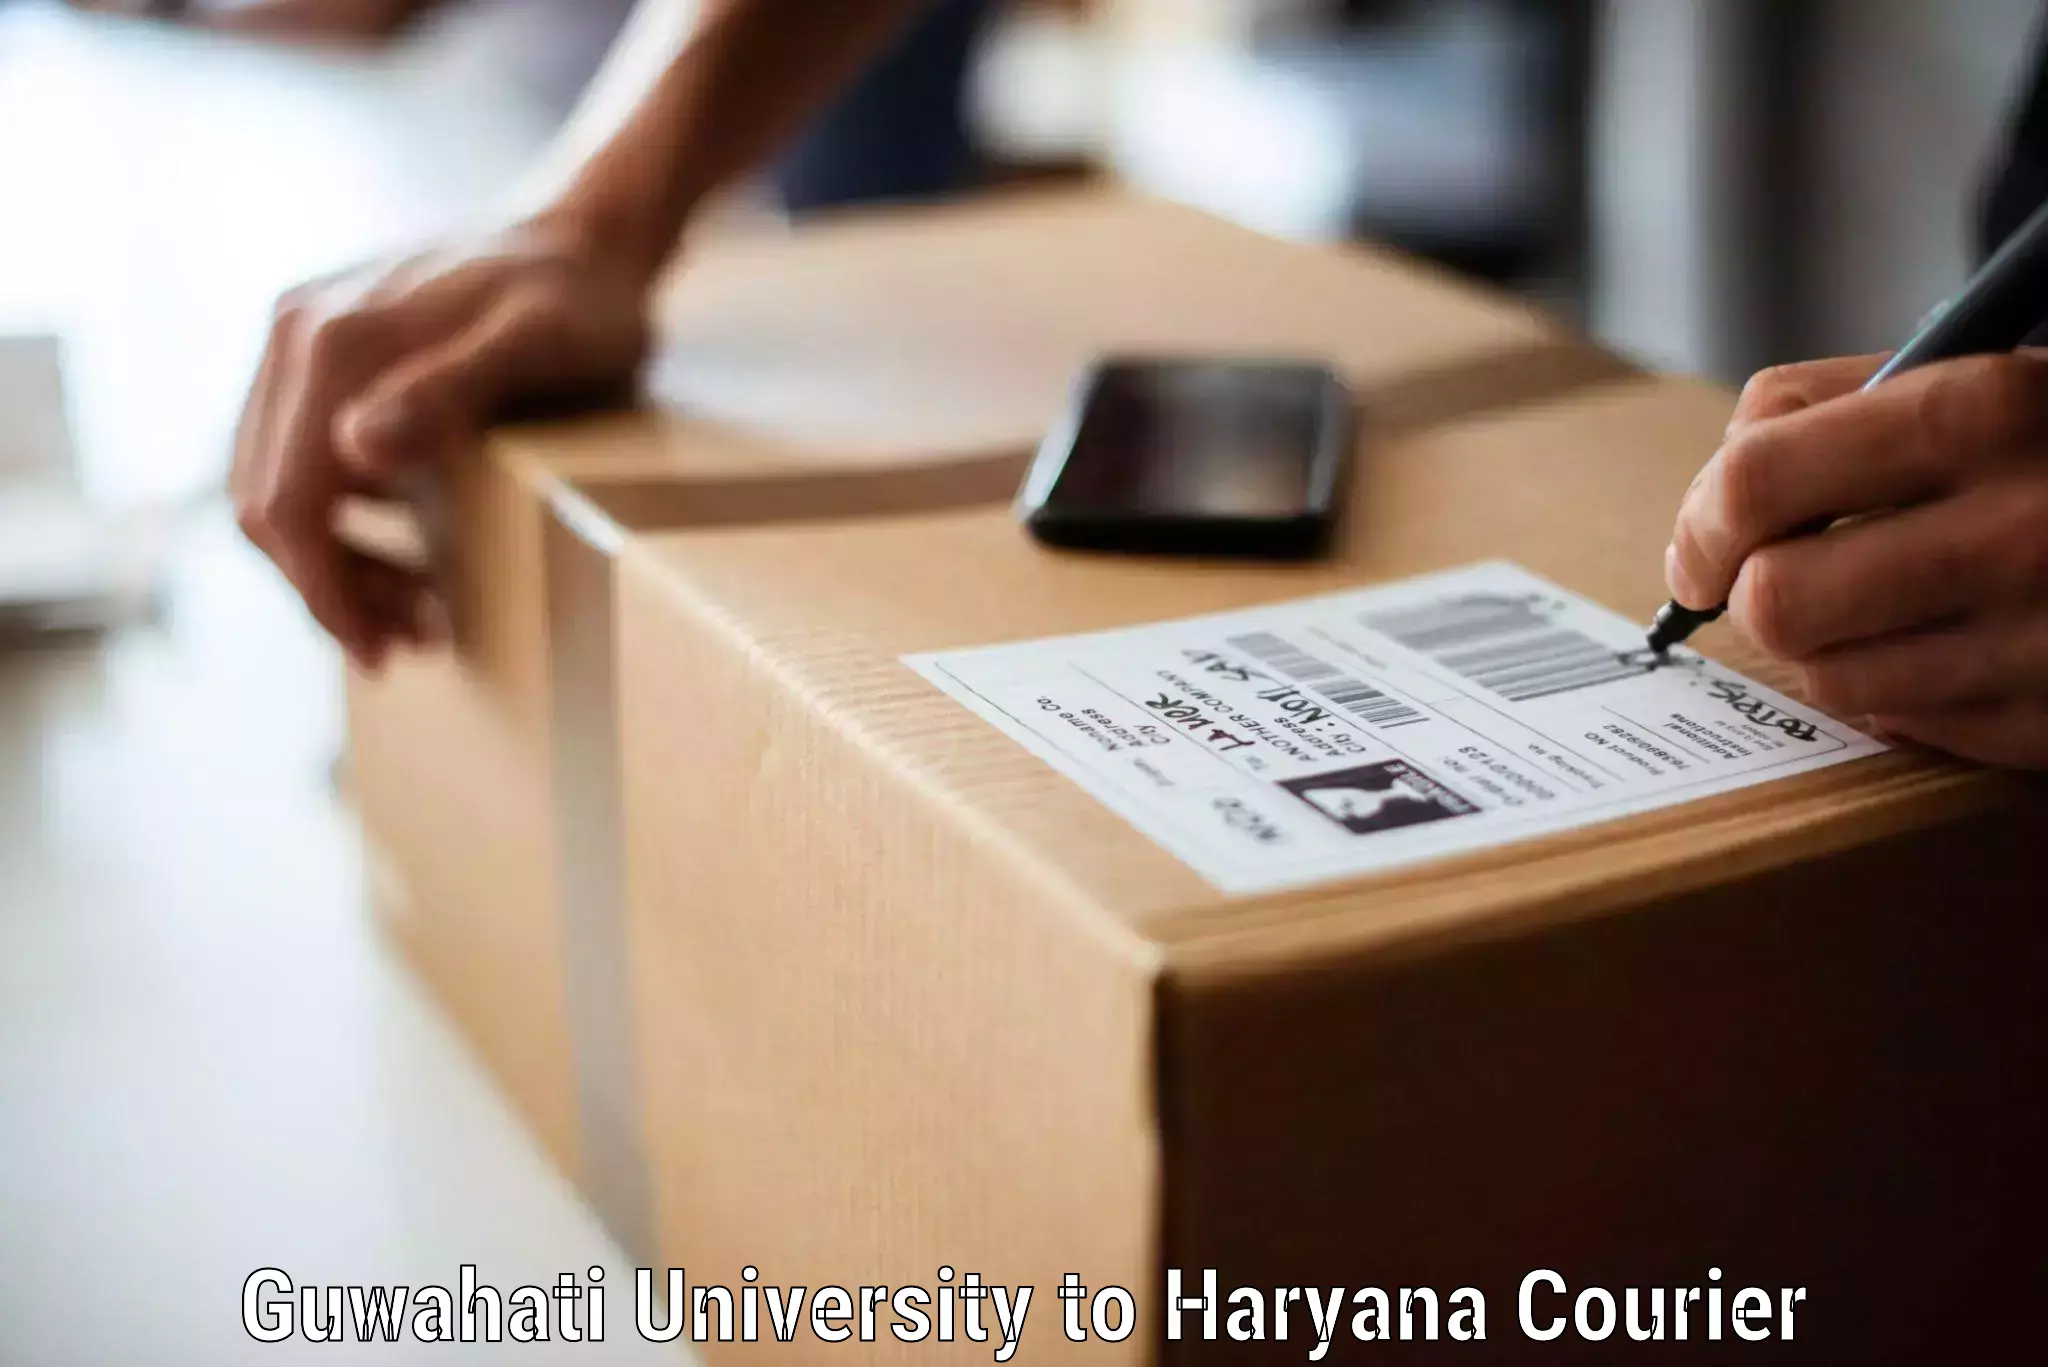 Quality moving company Guwahati University to Bilaspur Haryana